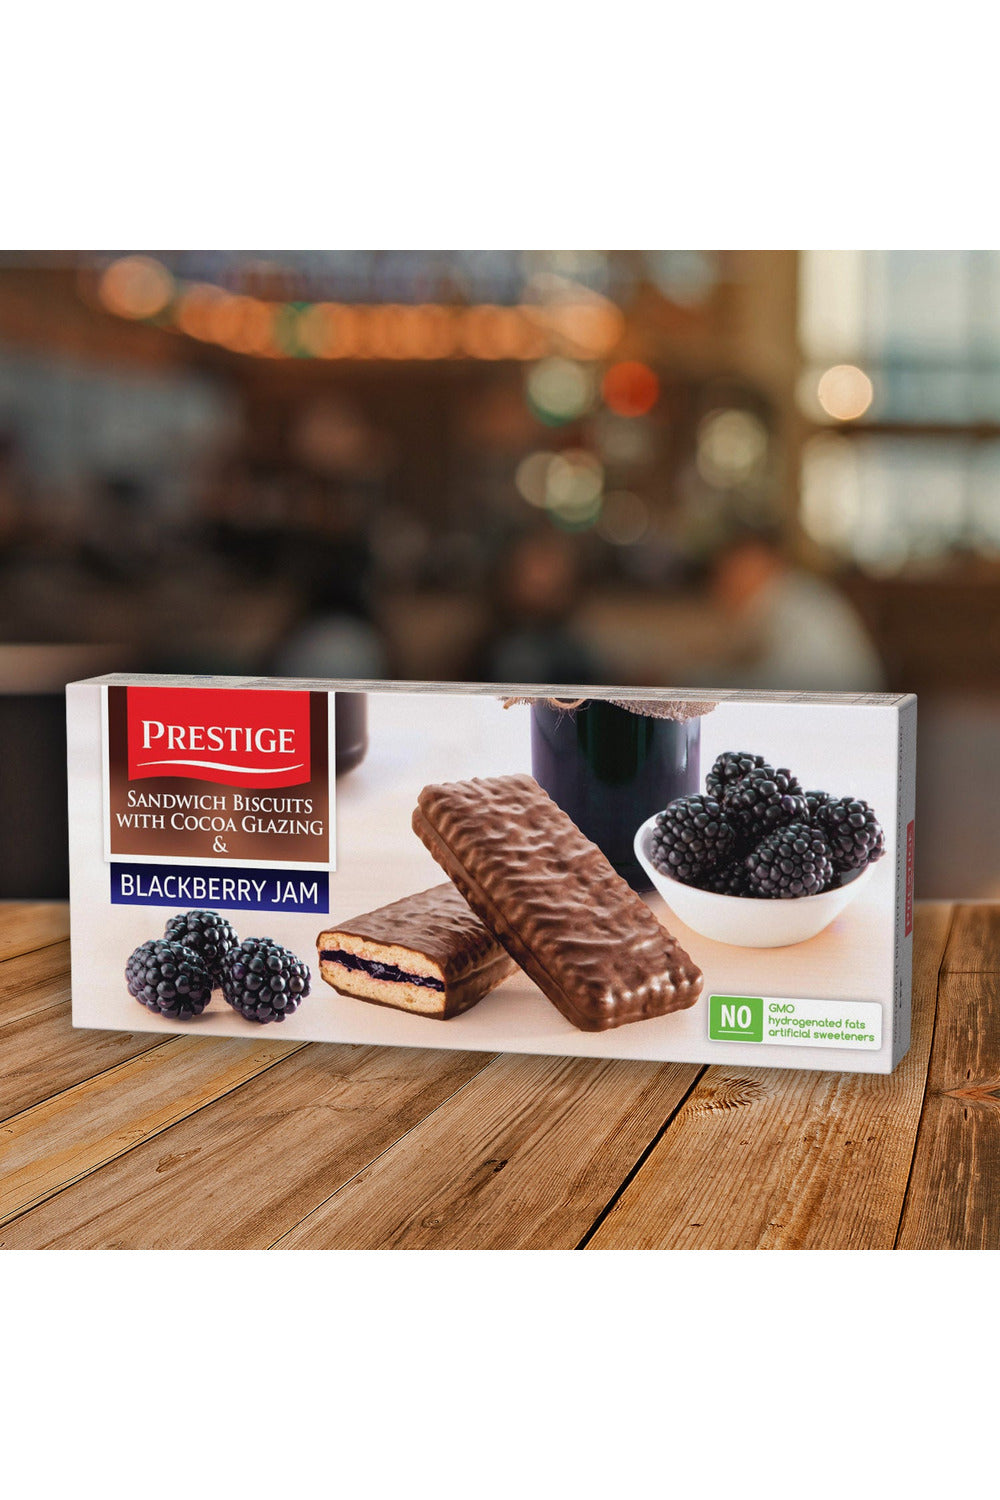 Prestige Sandwich Biscuits with Cocoa Glazing & Blackberry Jam